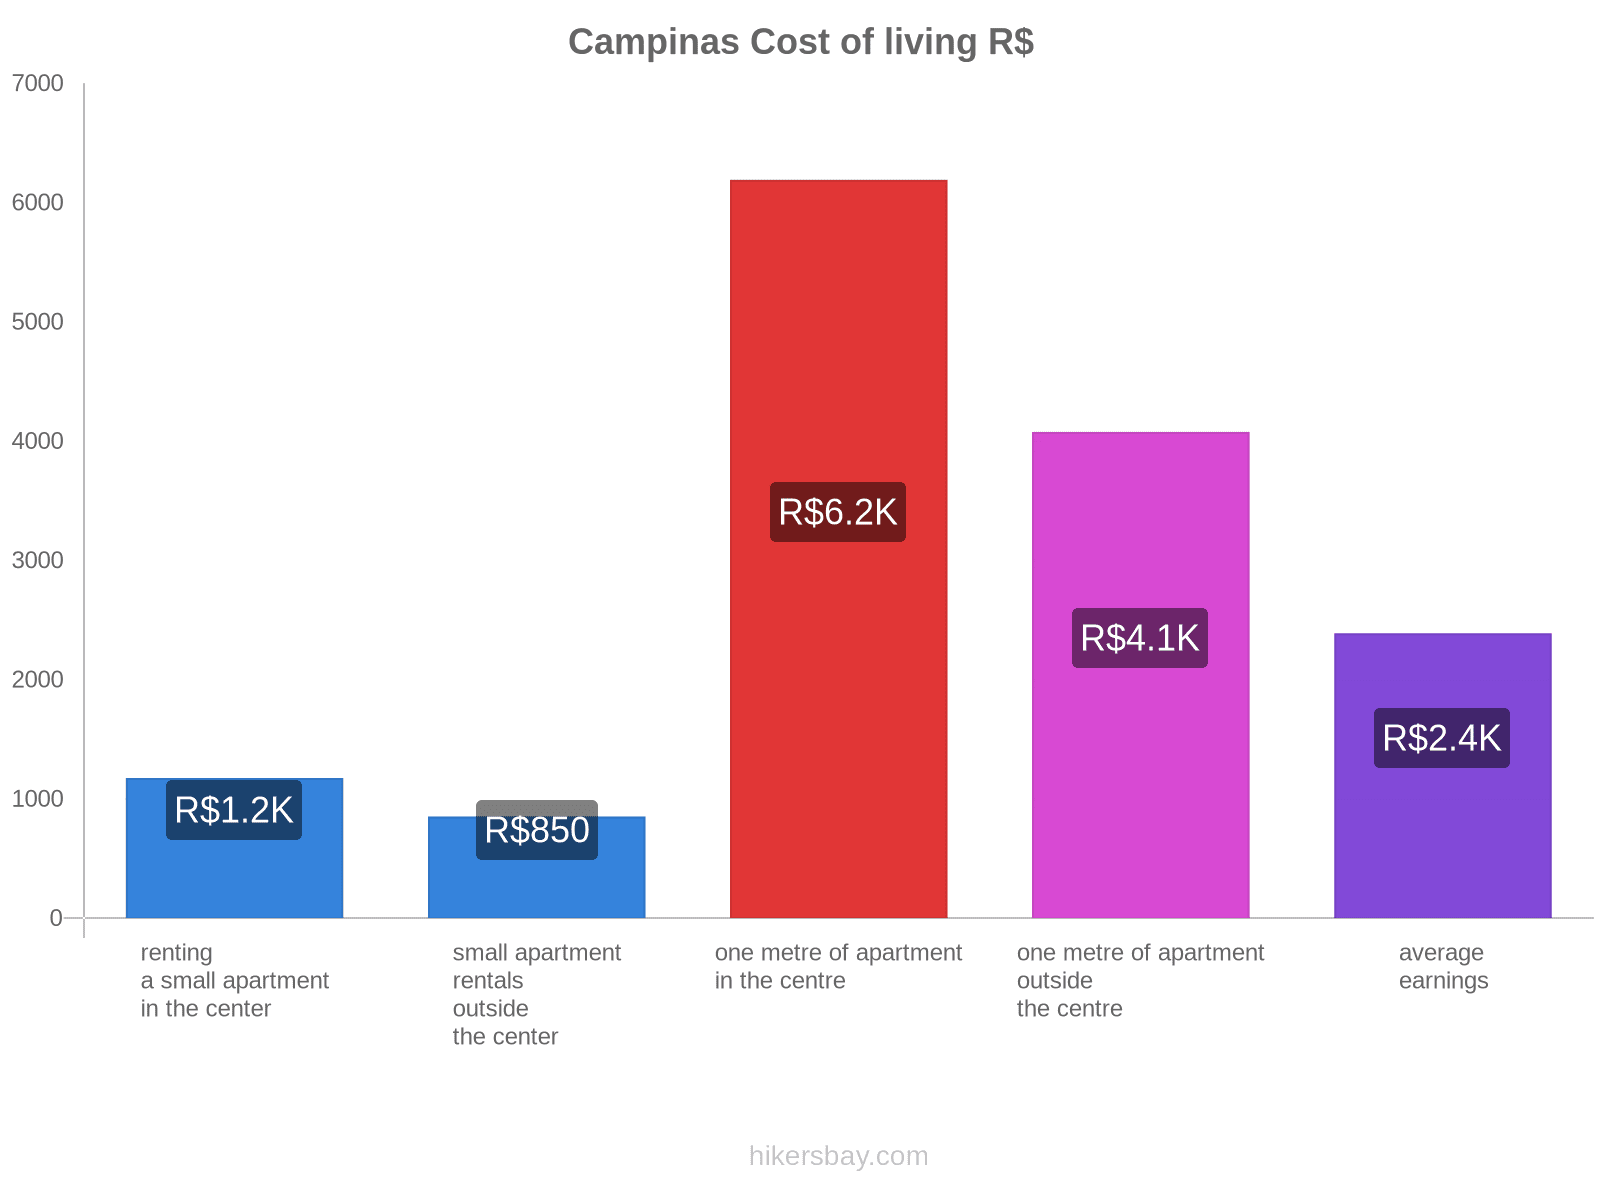 Campinas cost of living hikersbay.com